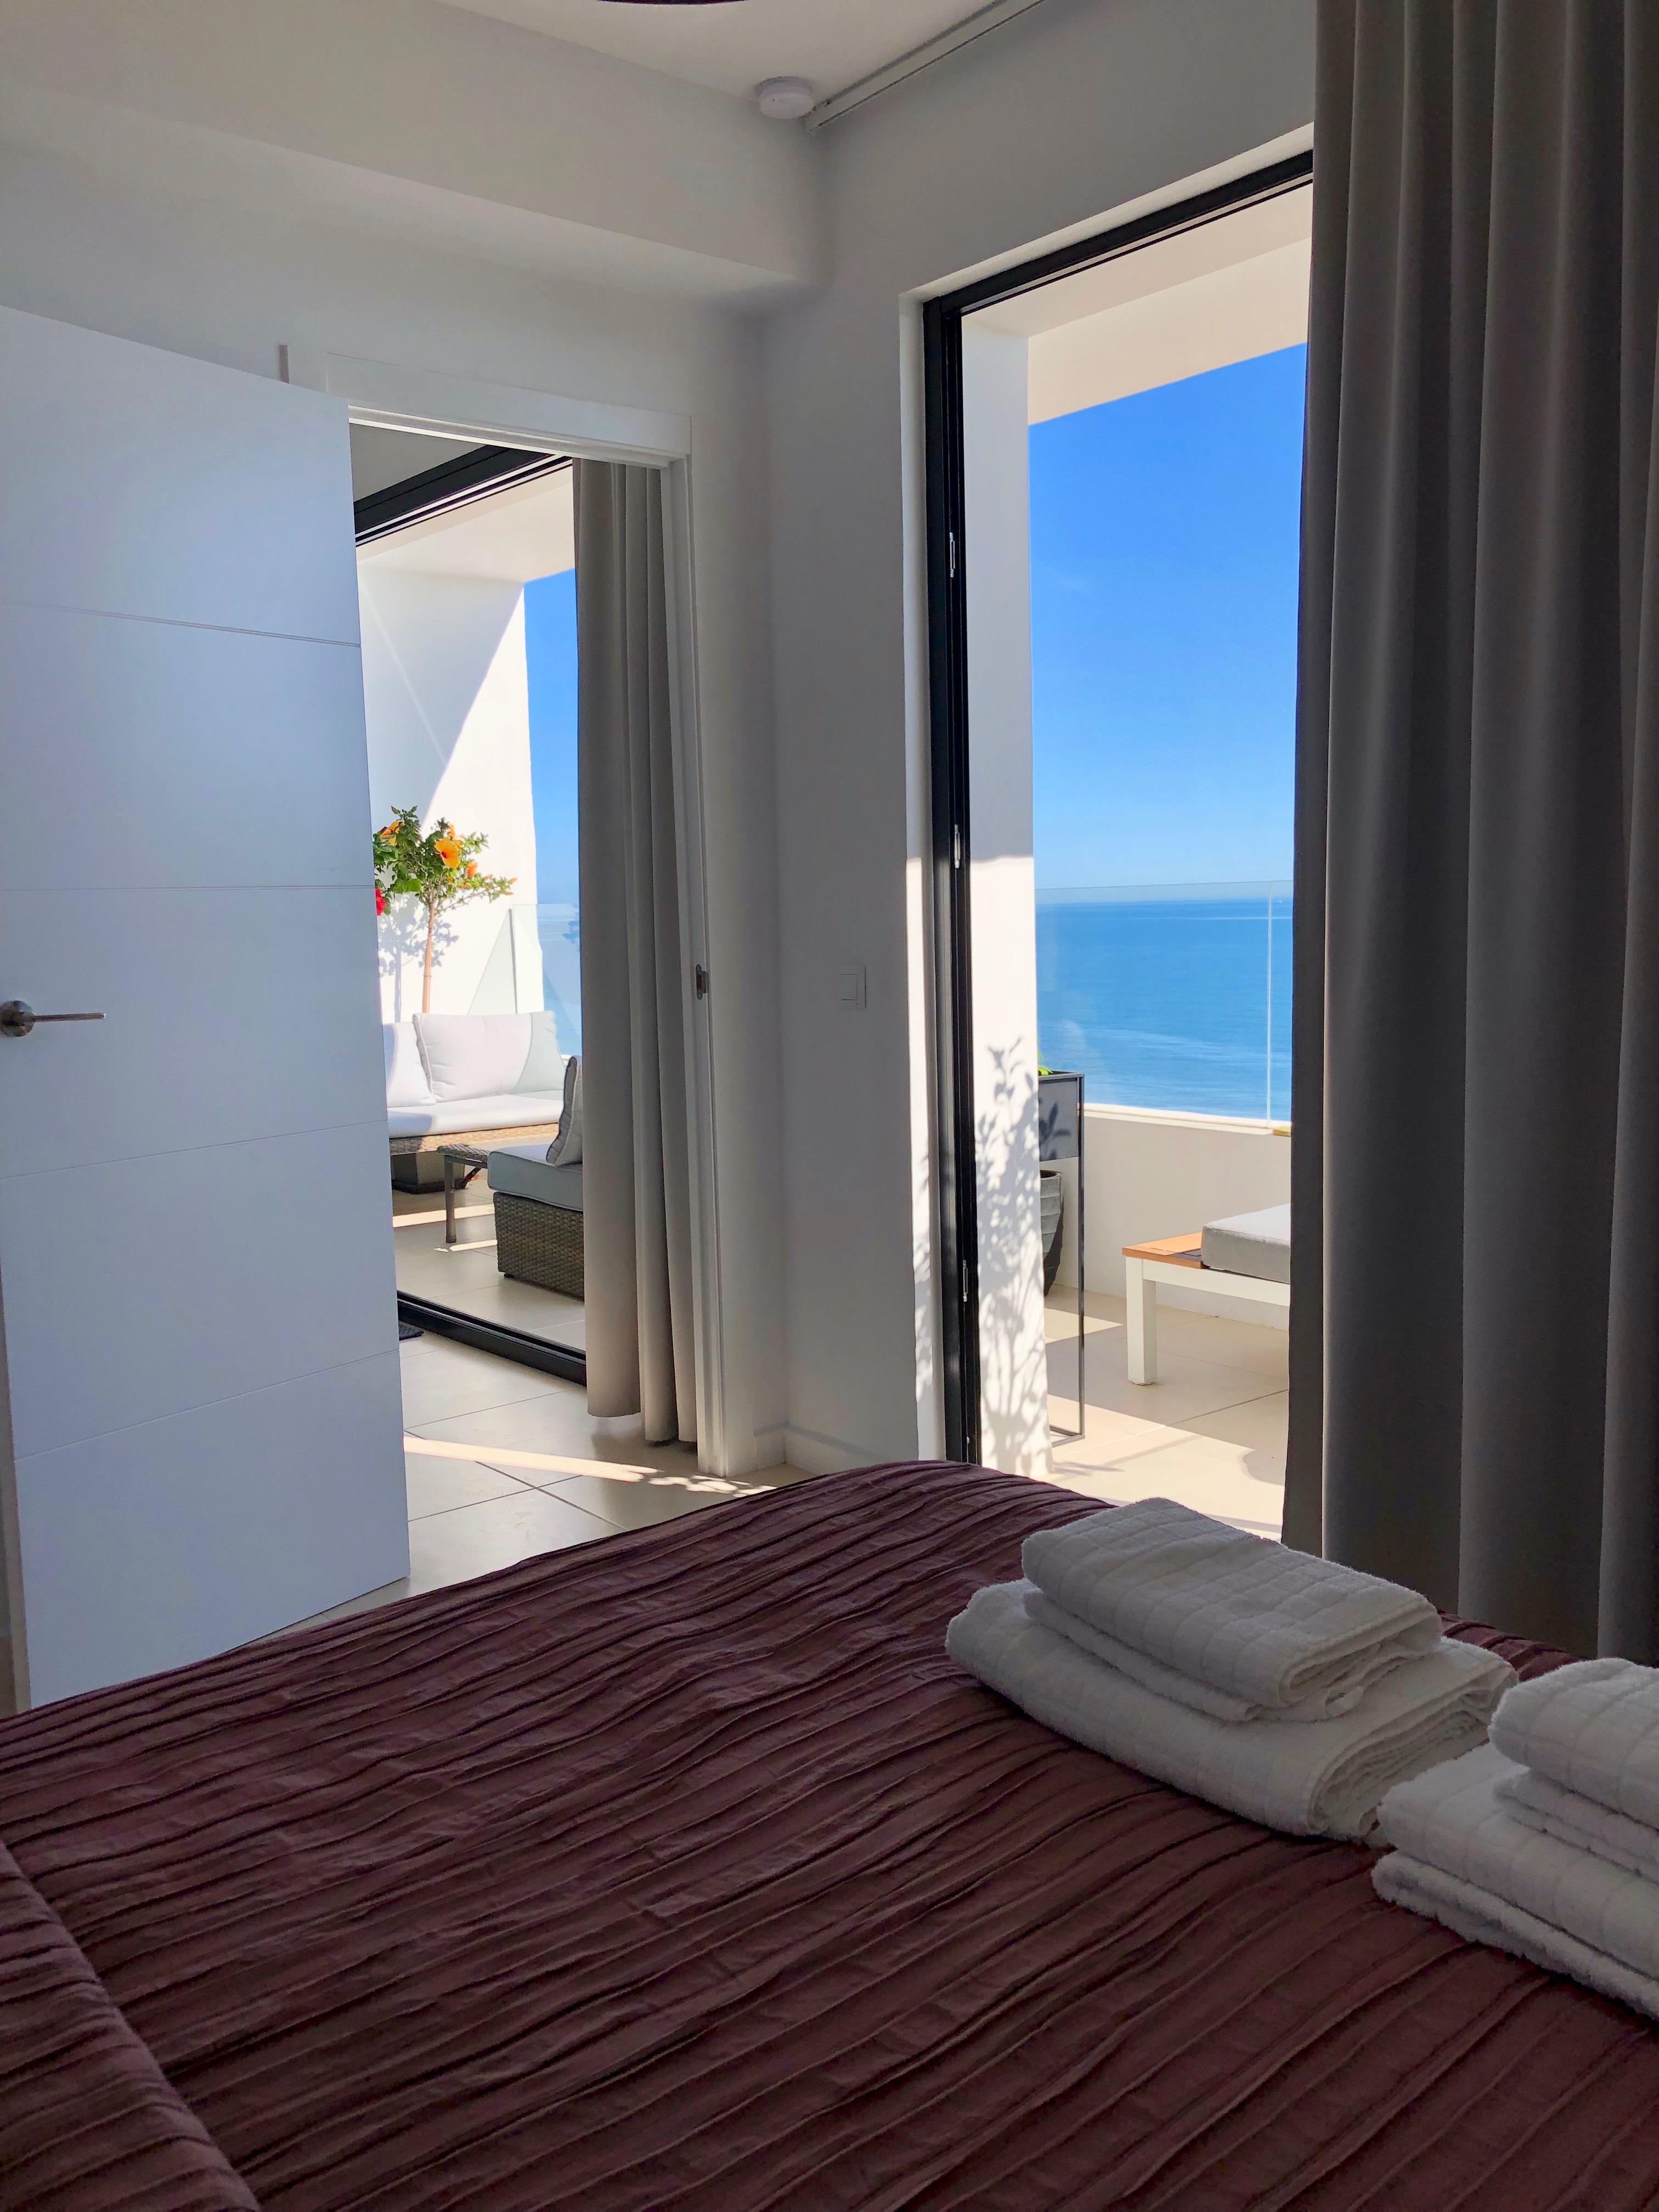 Luxury Penthouse Apartment in Estepona Casa de Gran Vista. Image shows views from main bedroom